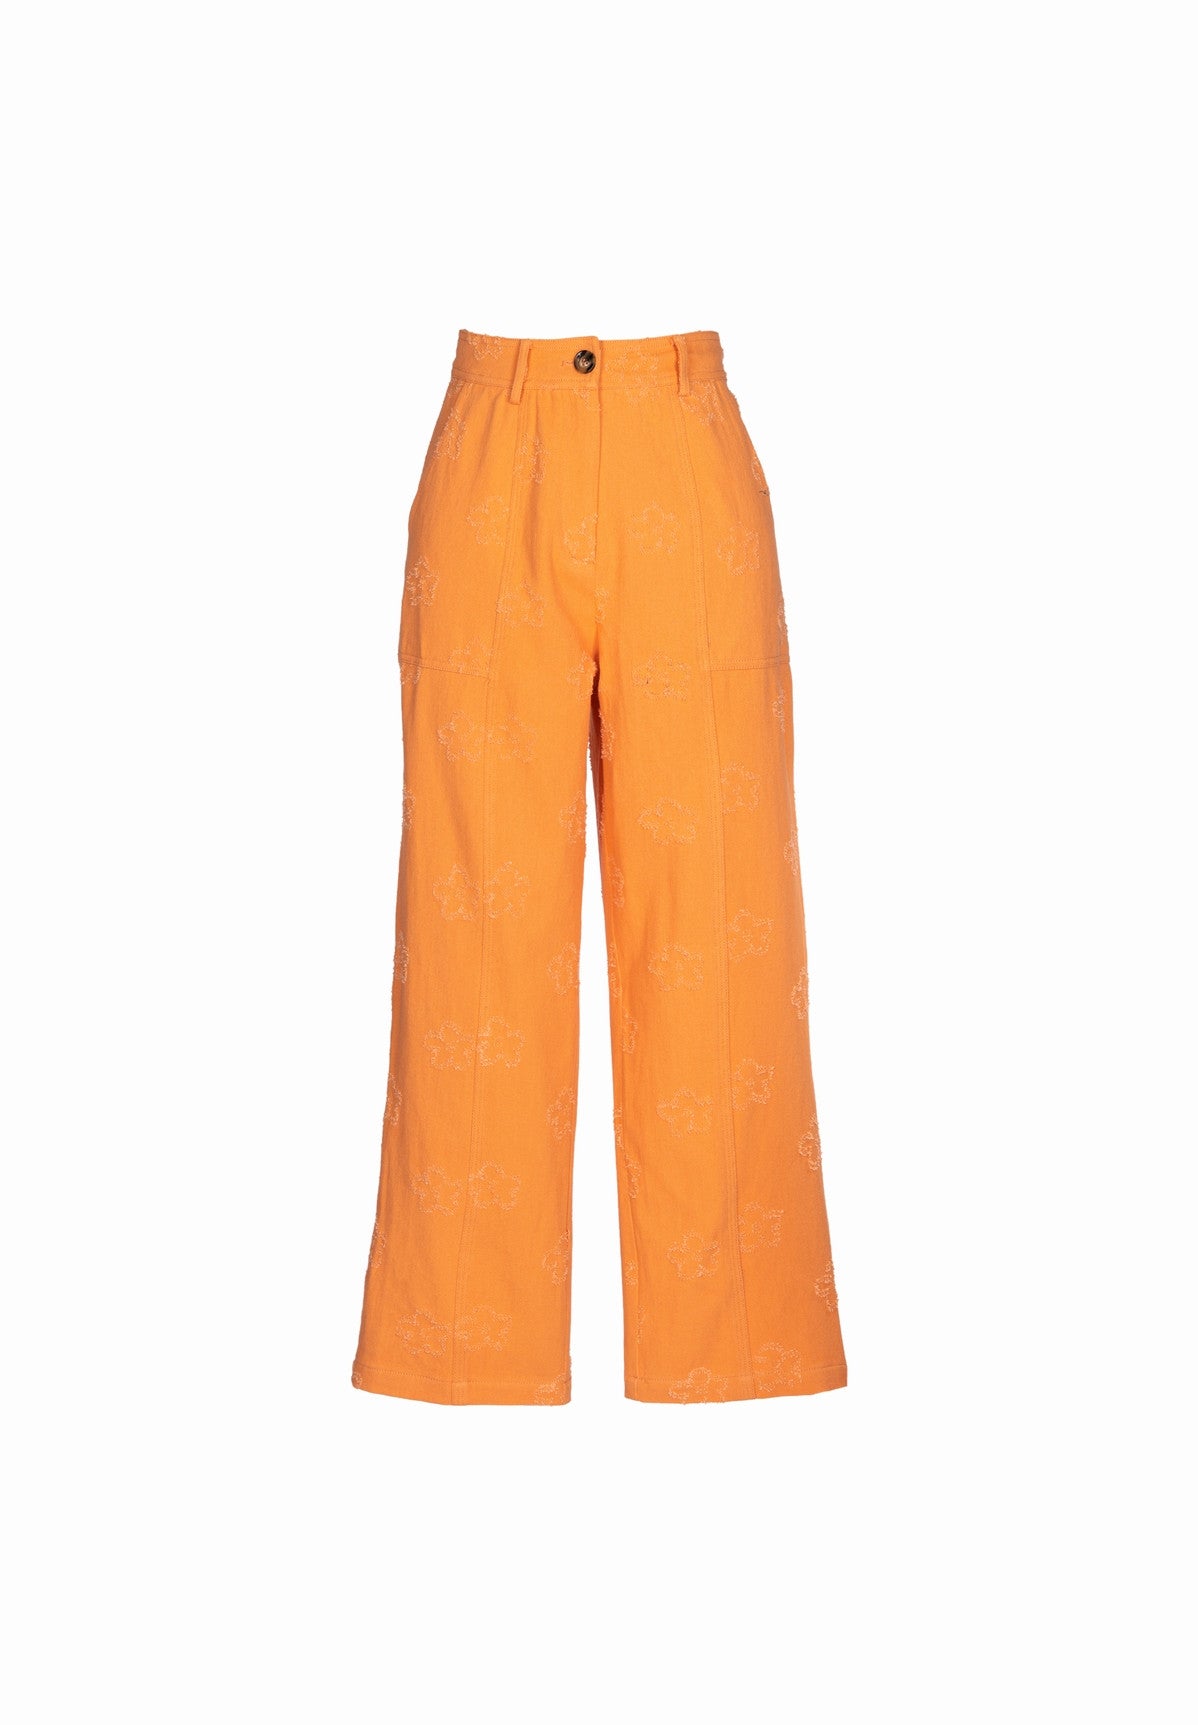 Orange PYRENEE cotton pants